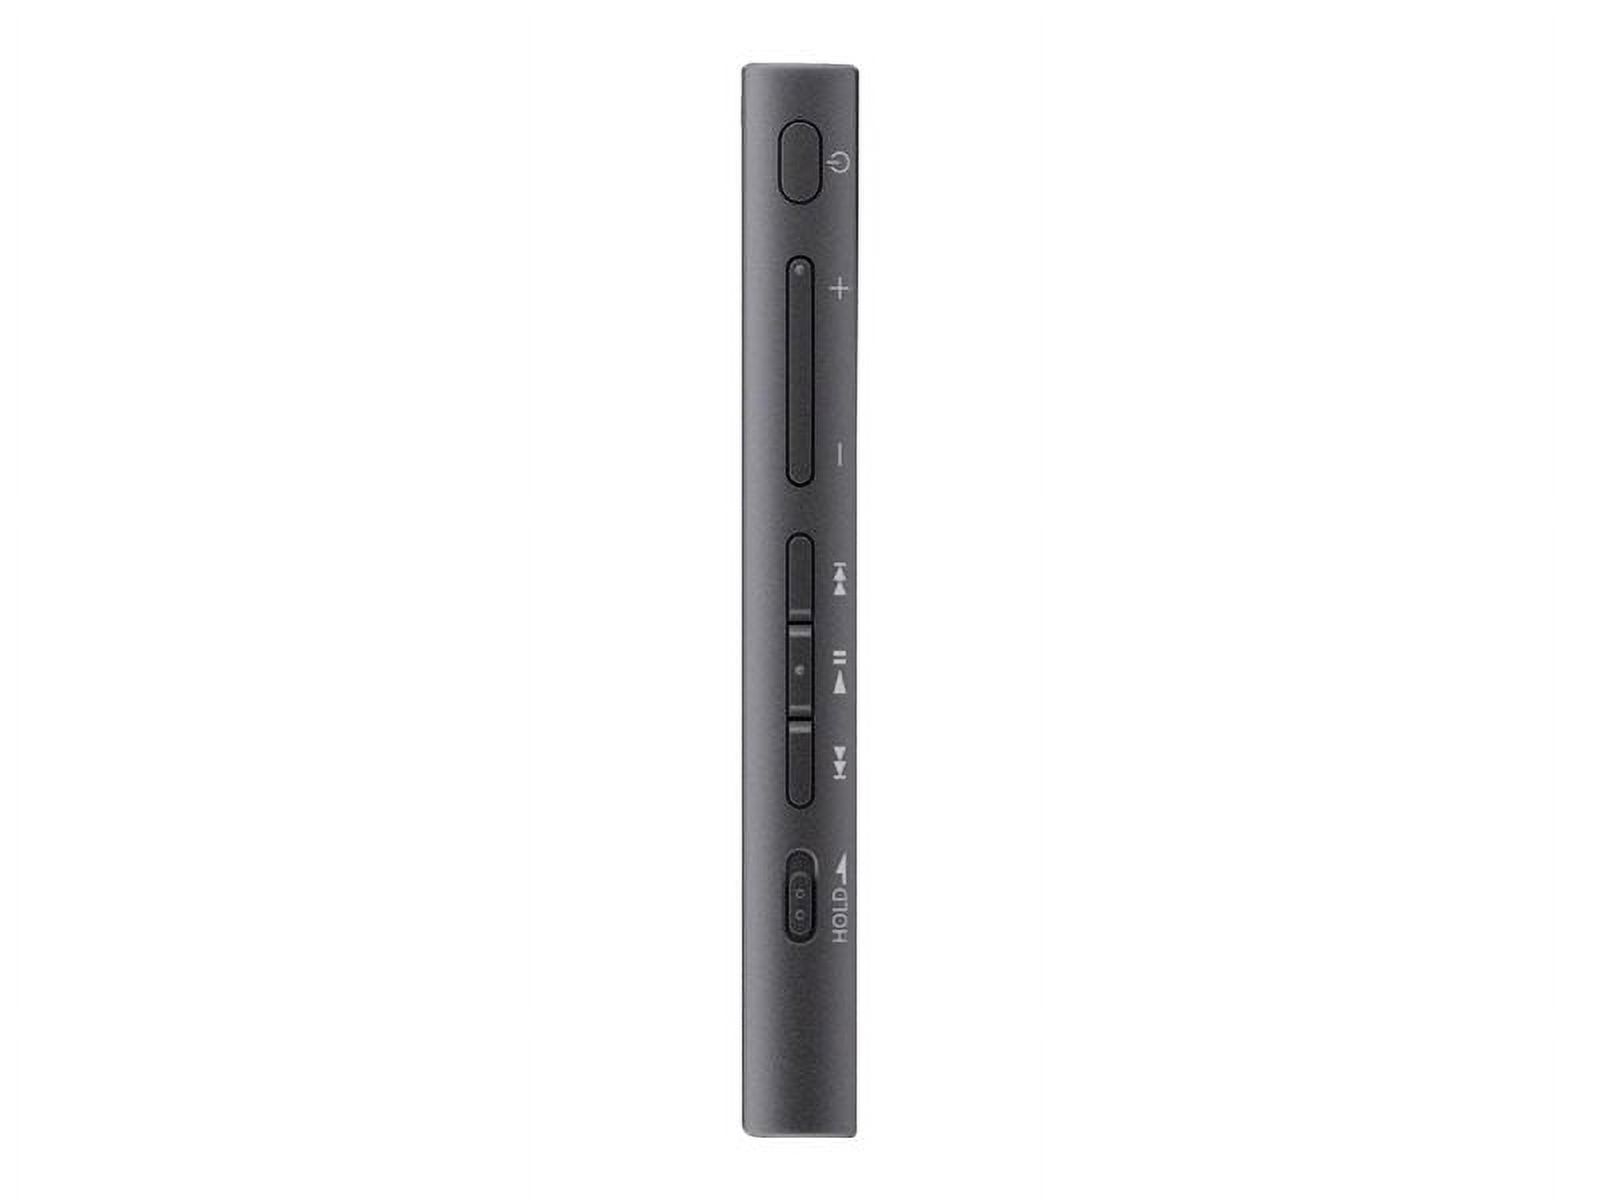 Sony Walkman NW-A45 - Digital player - 16 GB - grayish black - image 4 of 5